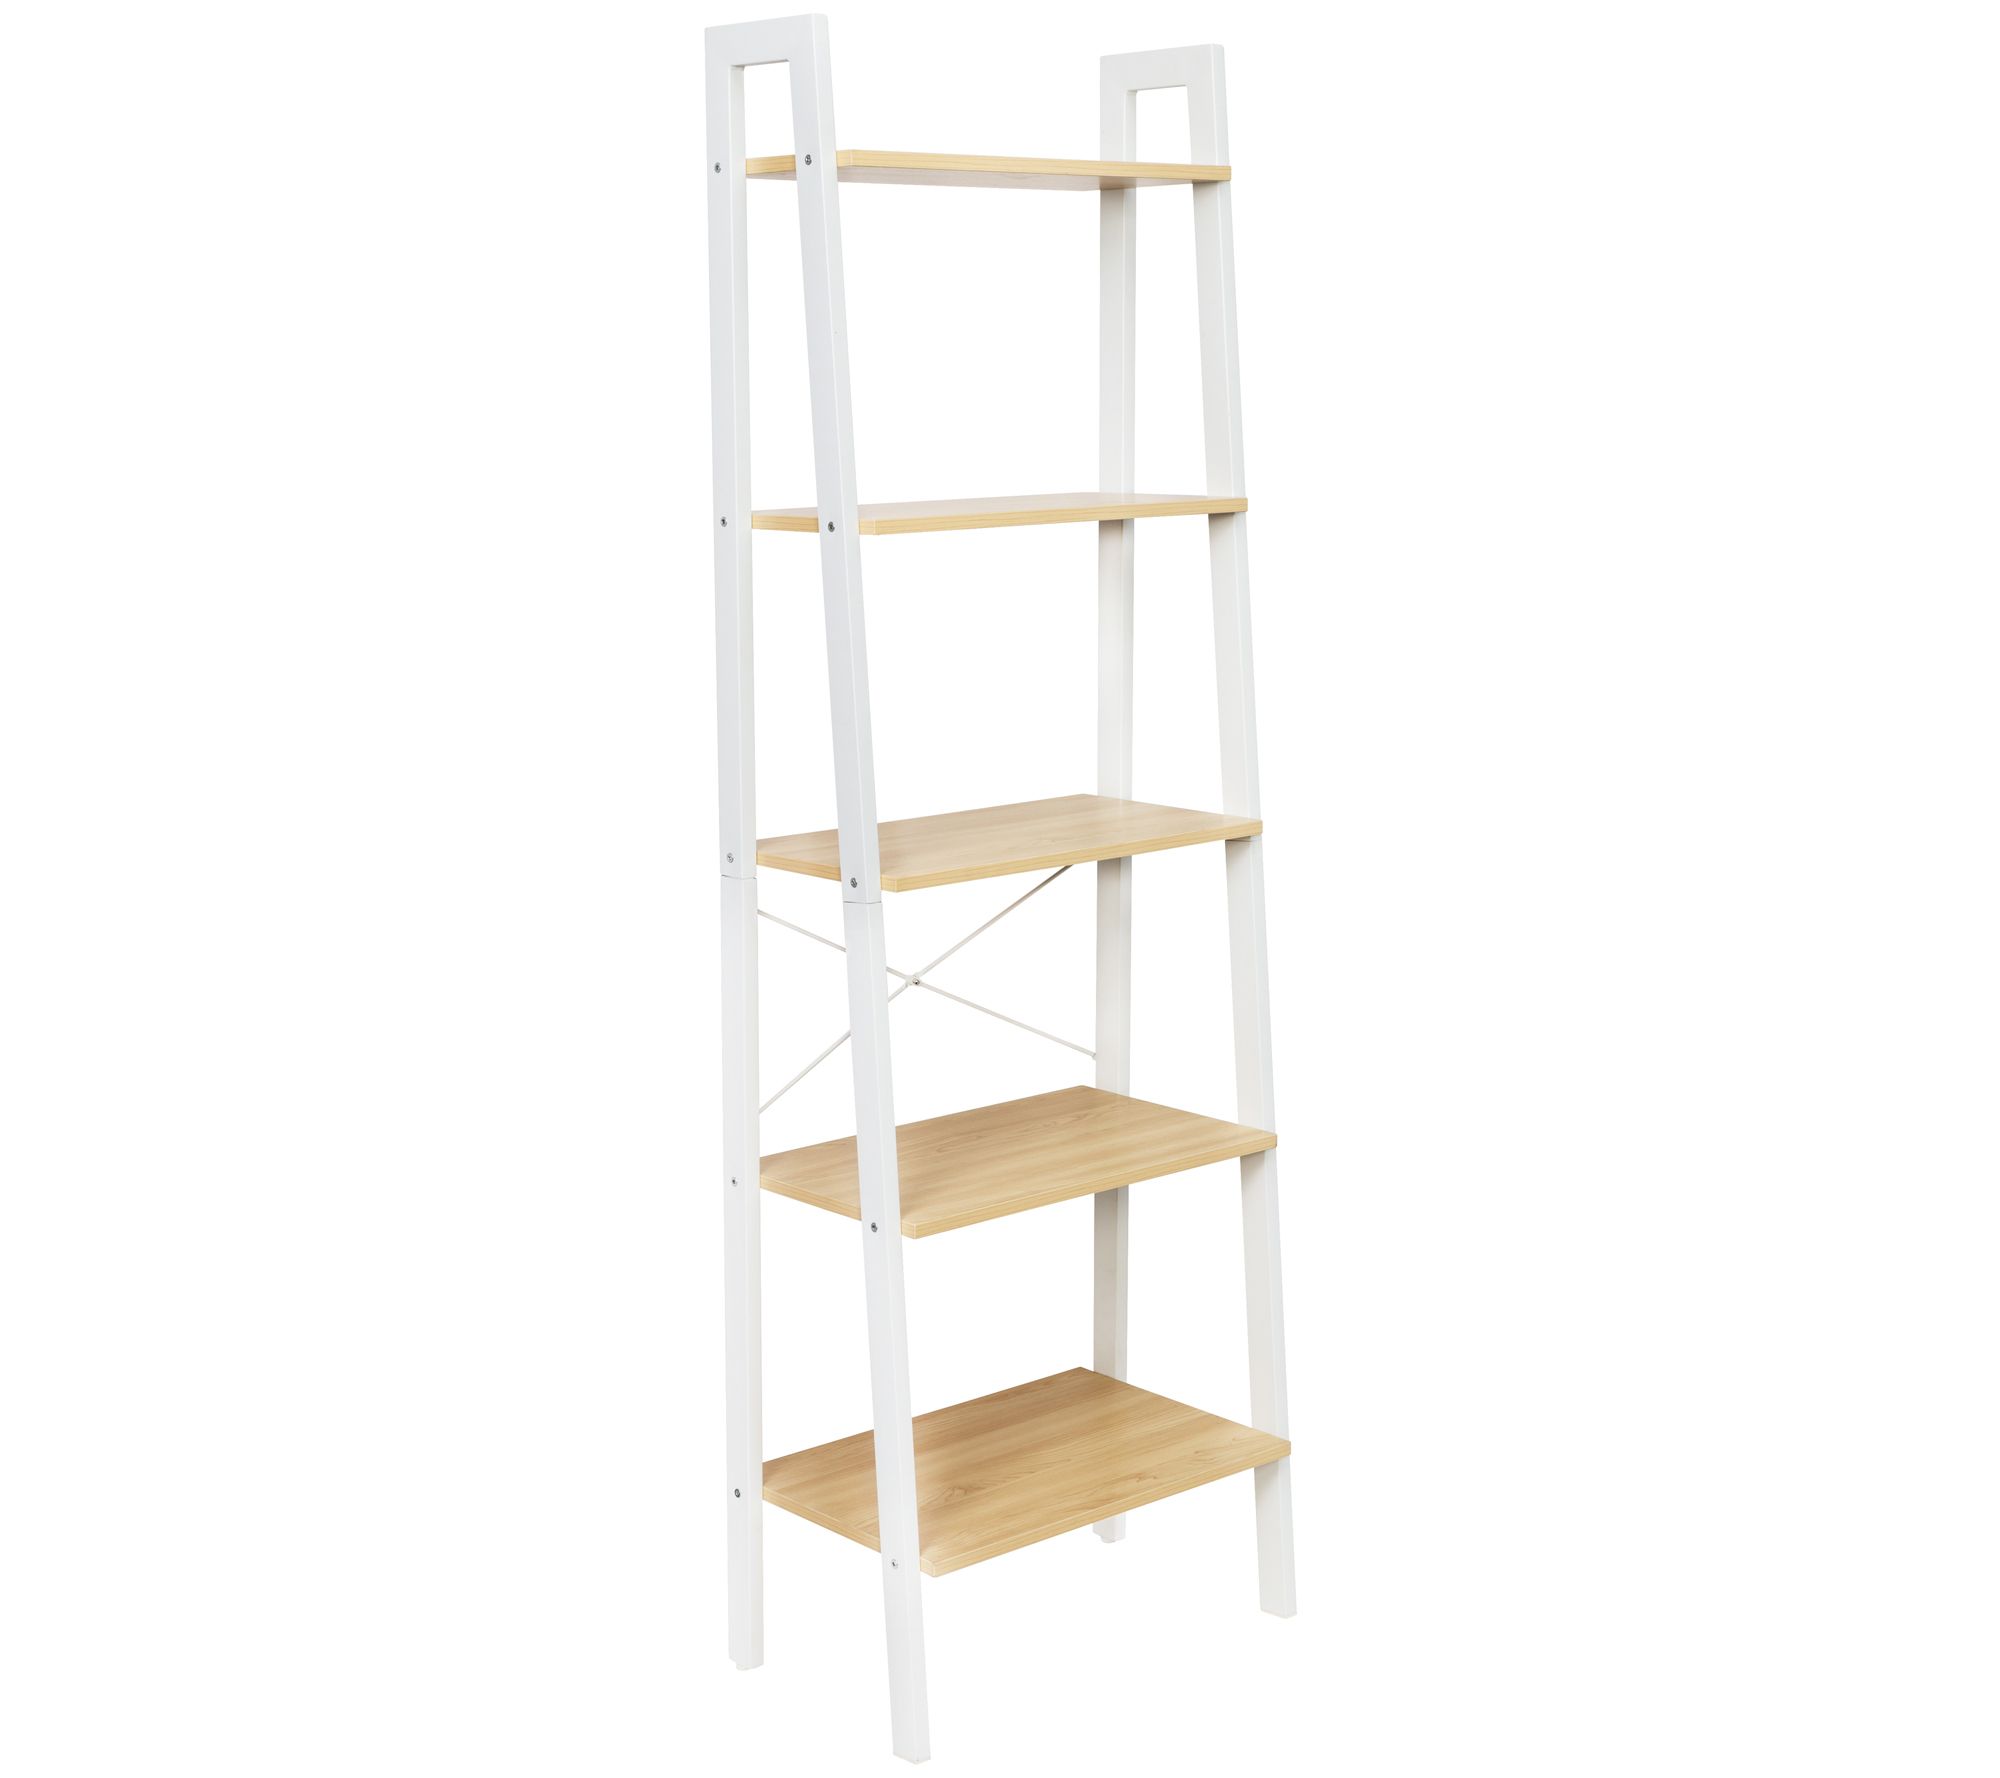 Honey-Can-Do Wood and Metal A-Frame Ladder Shelf, 5 Tiers - QVC.com